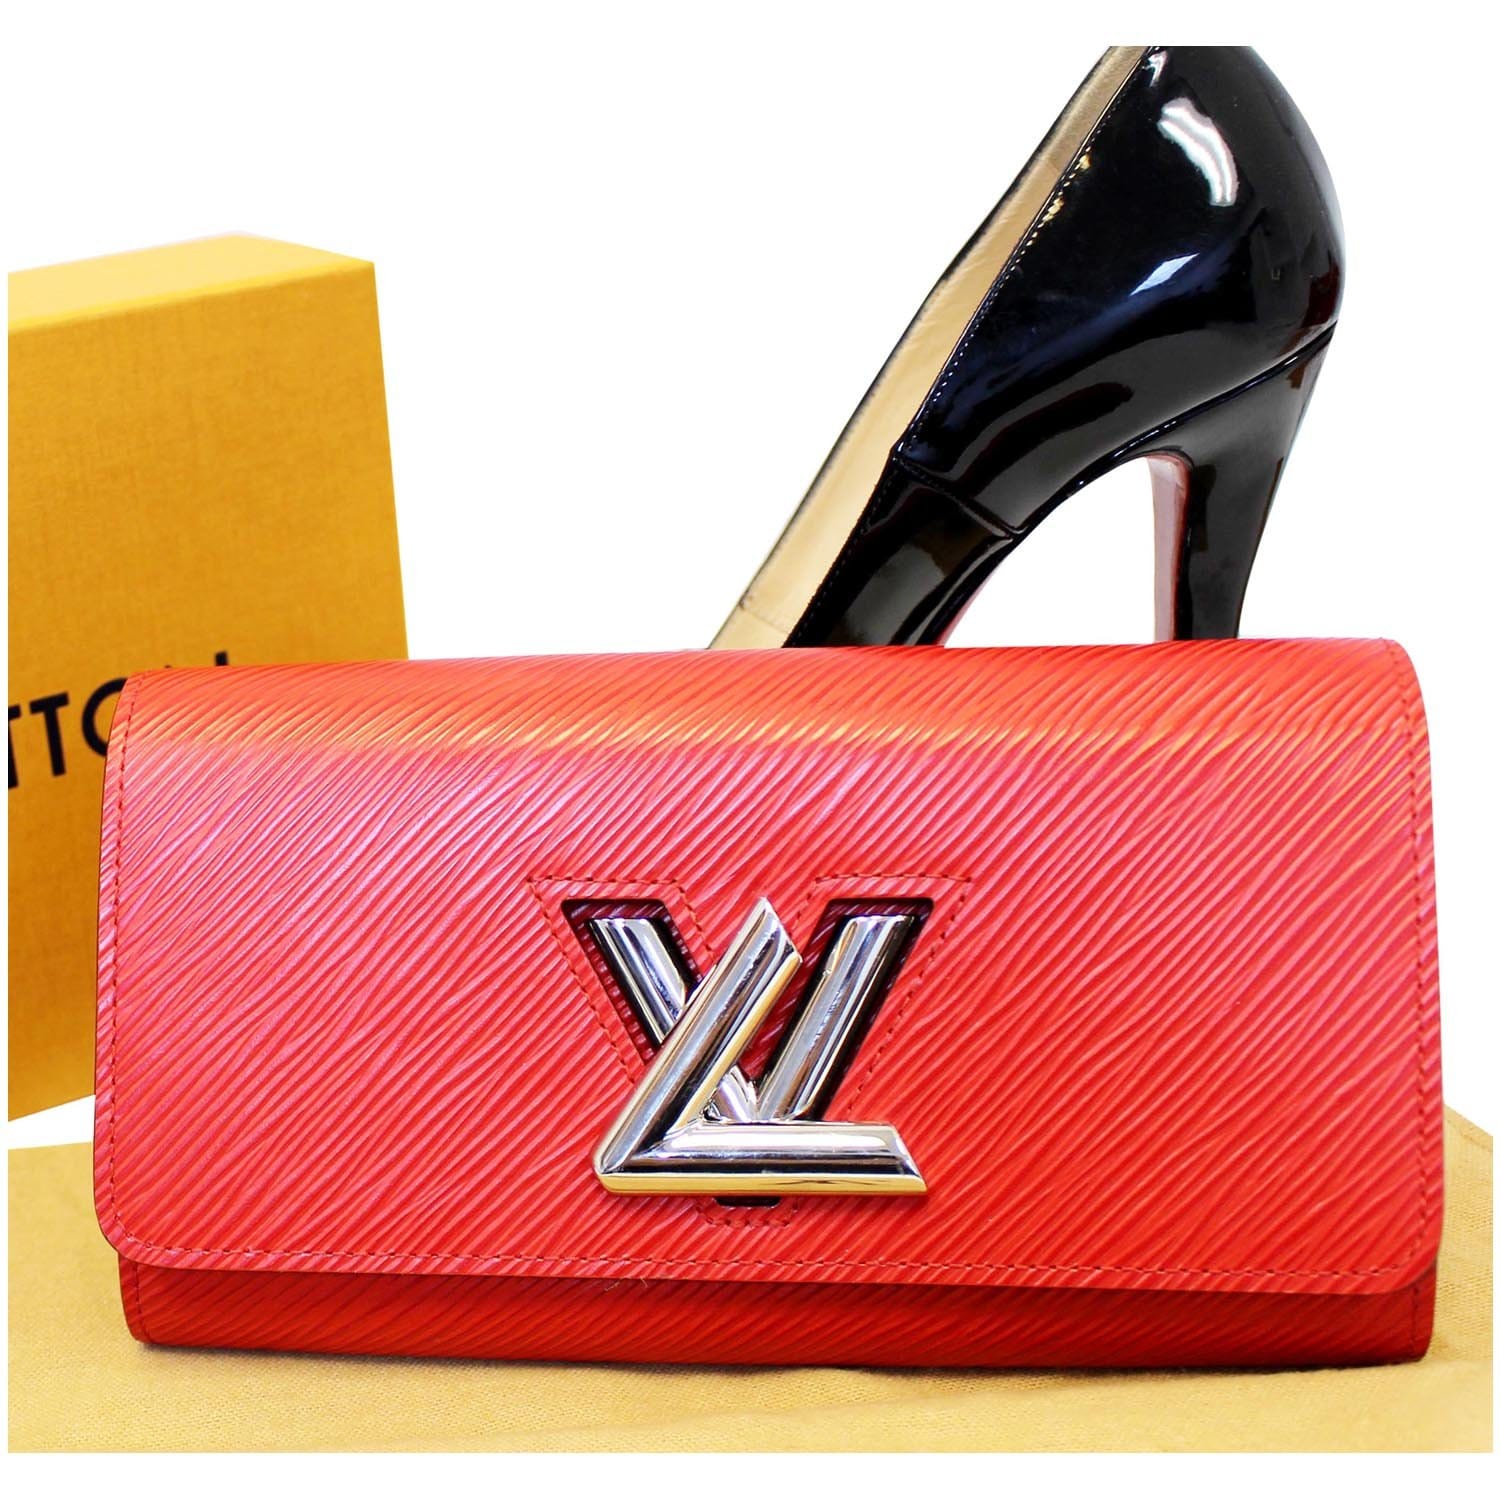 Louis Vuitton Twist Wallet Epi Leather Coquelicot